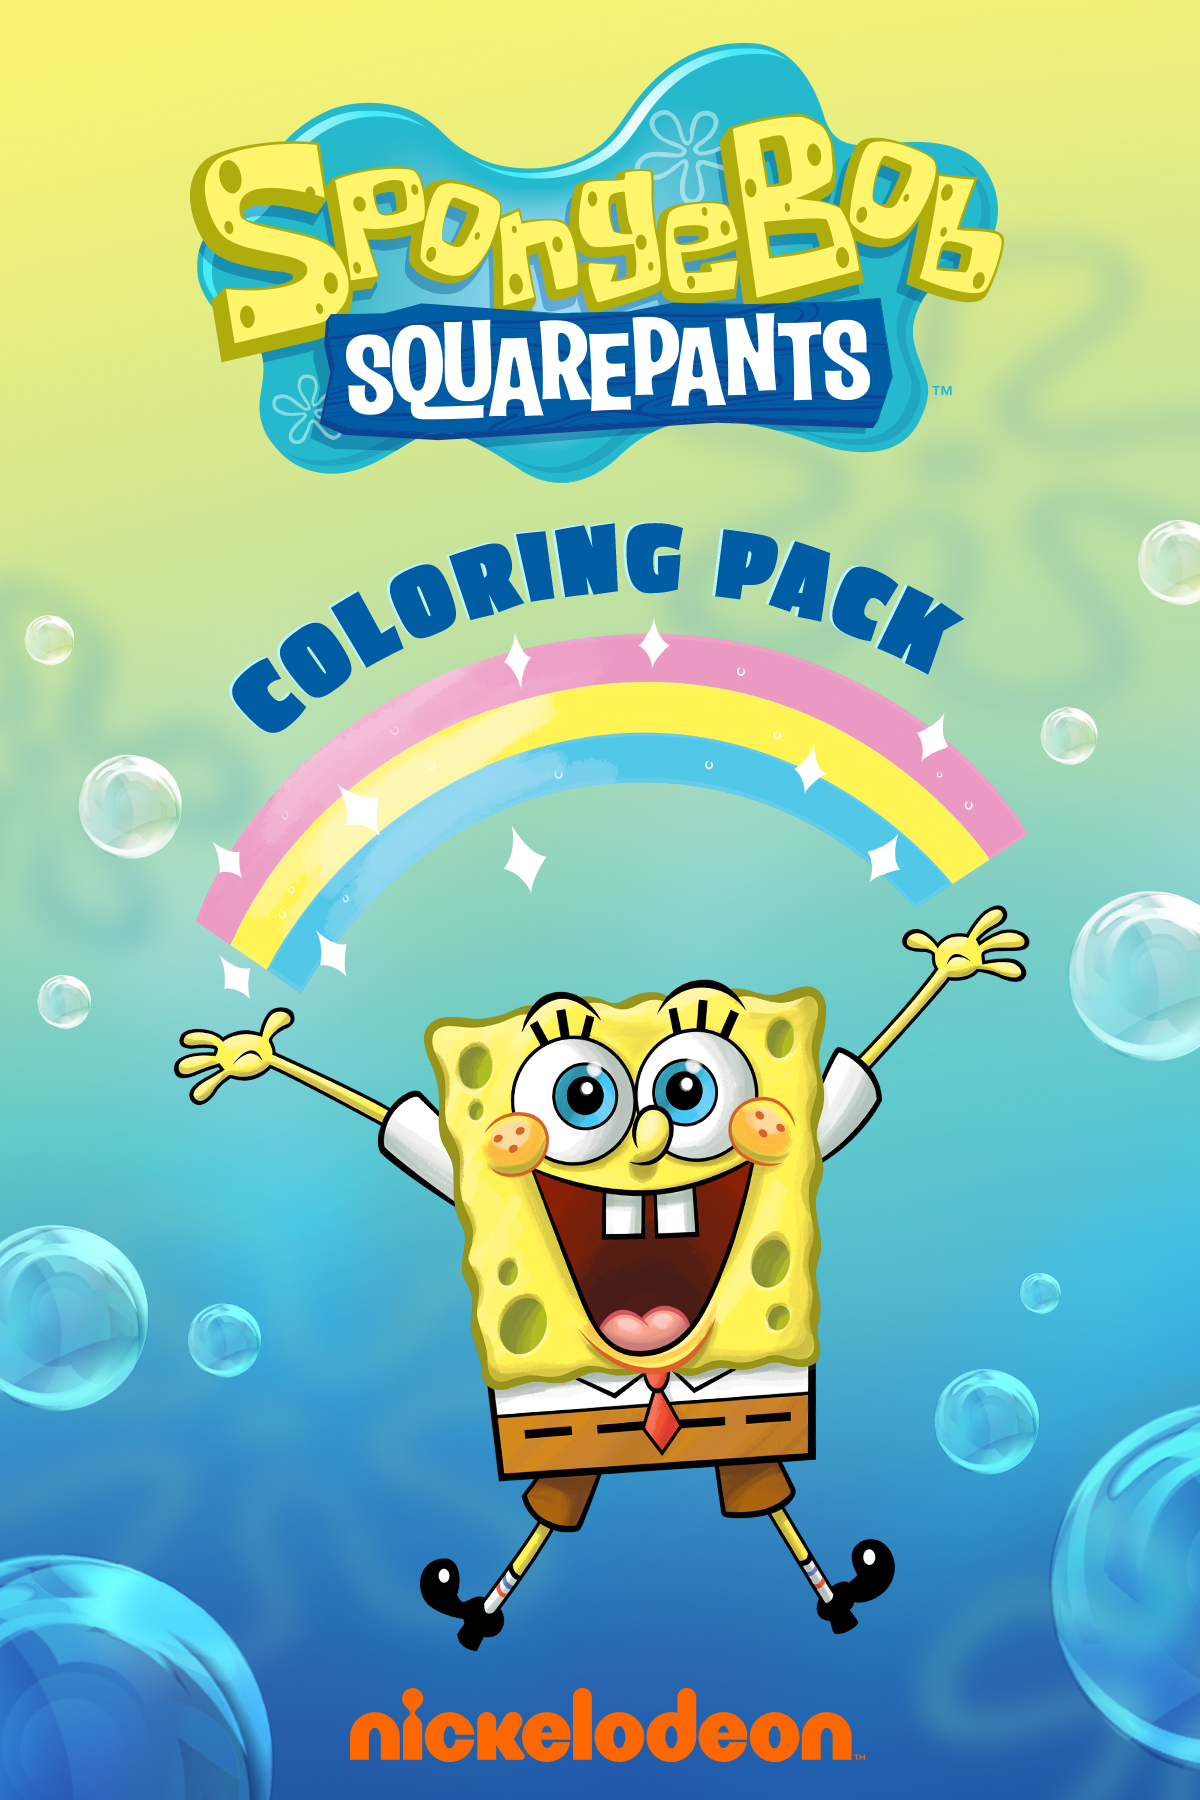 spongebob gary coloring page